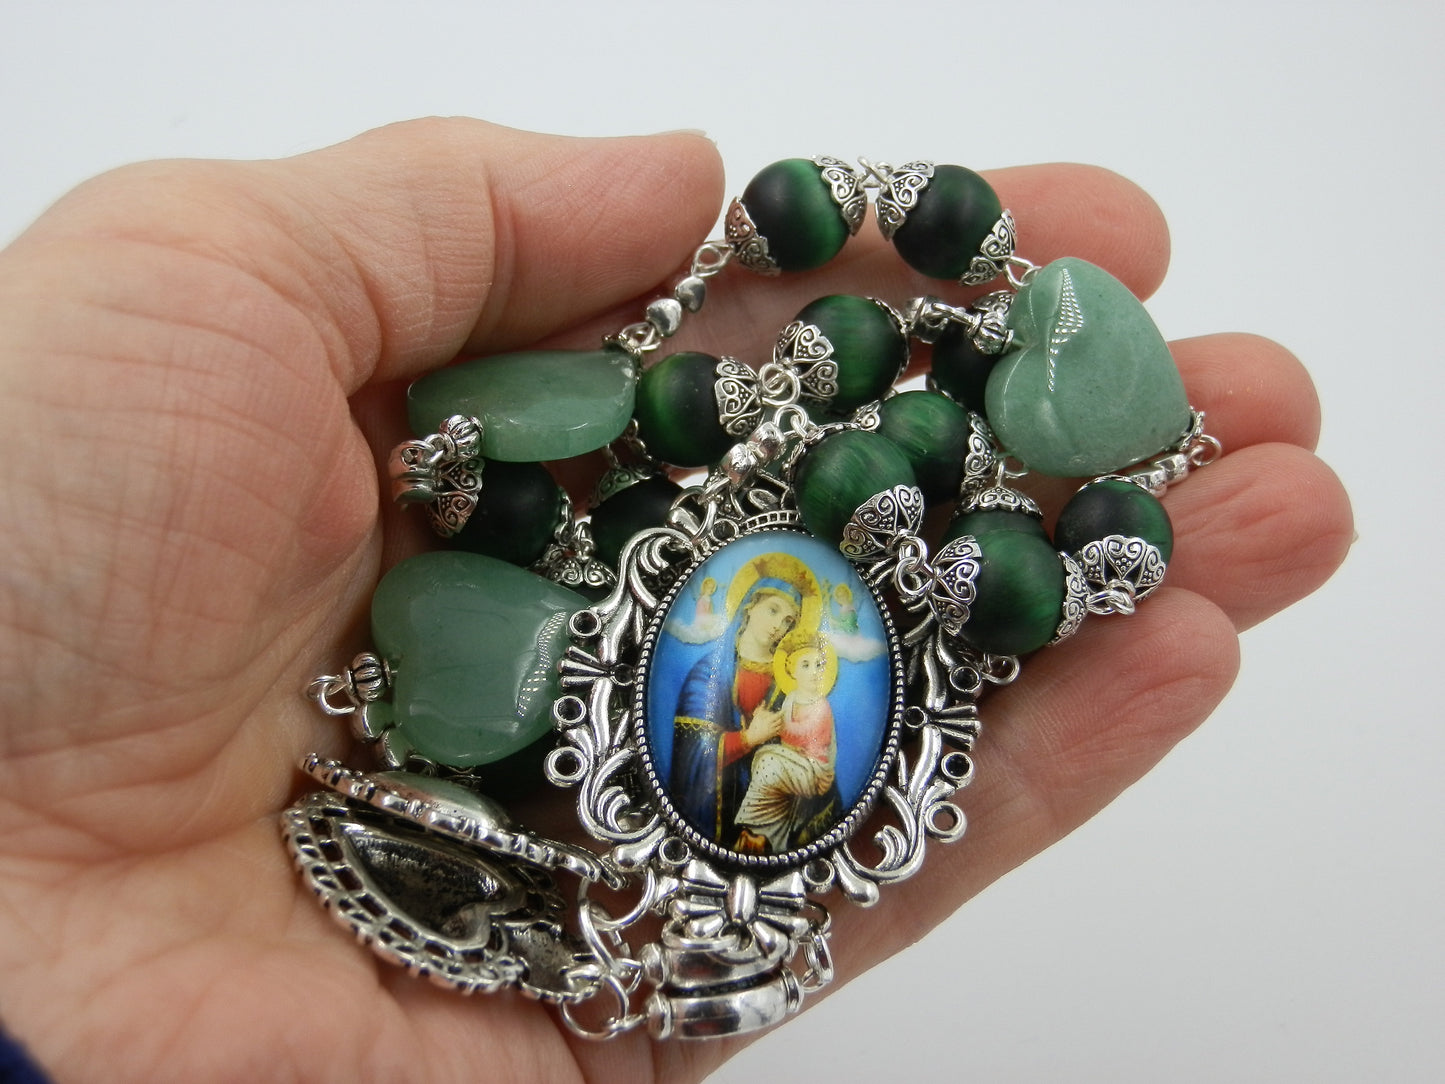 Two Hearts of Jesus and Mary prayer Chaplet, Heirloom tigers eye gemstone prayer beads, Rosaries, Spiritual beads, Rosary bead Chaplet.